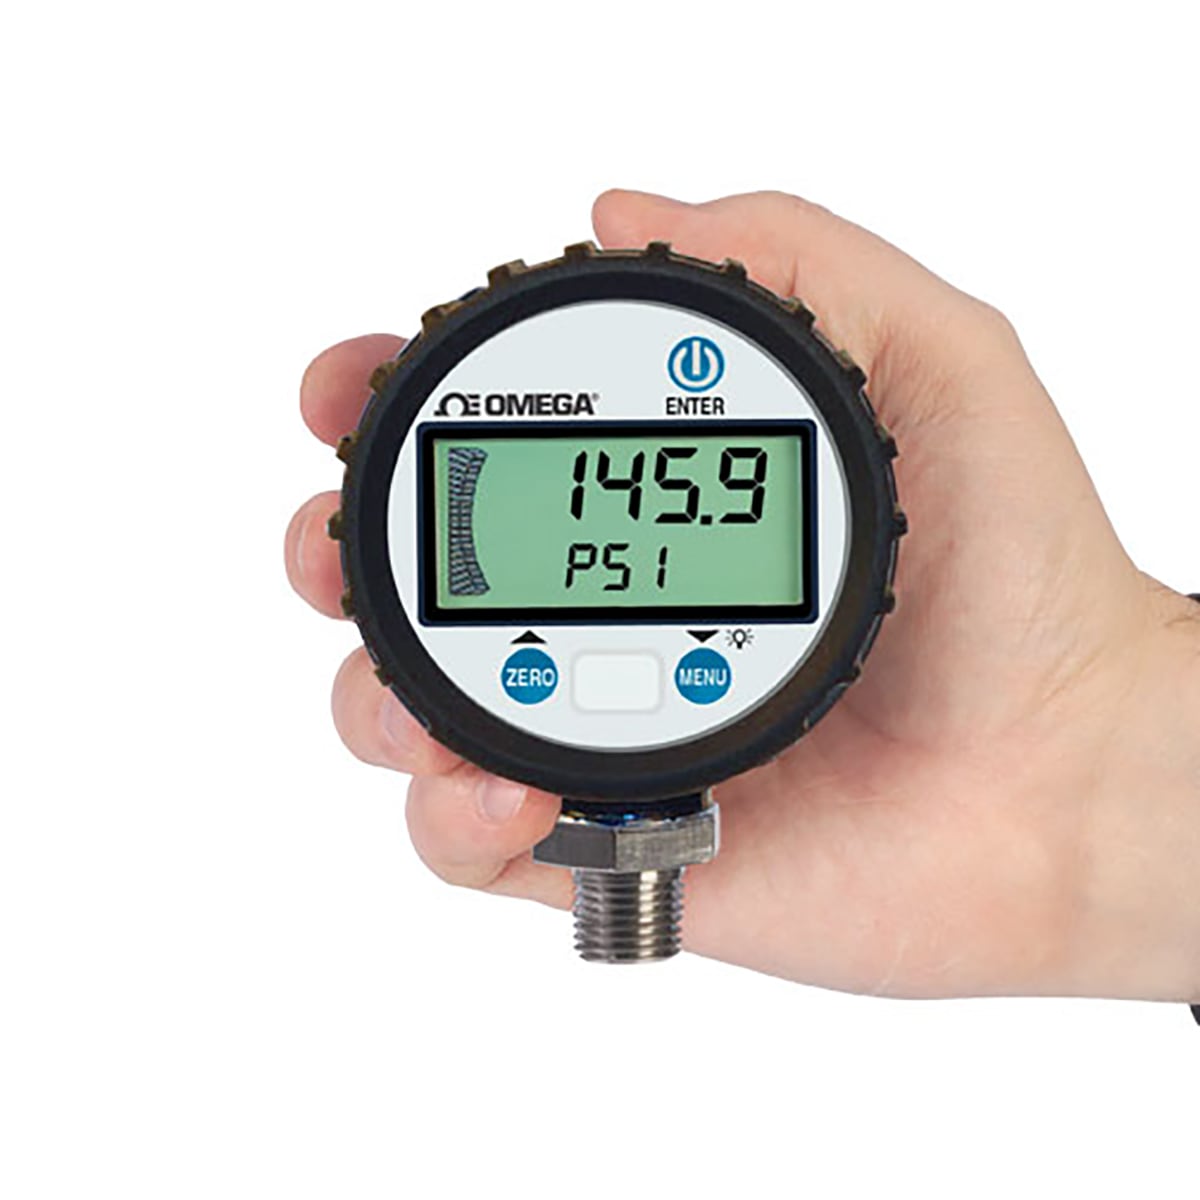 TC Digital LCD Screen Highly Accurate Tire Pressure Gauge W/ 4 Measurement Range 